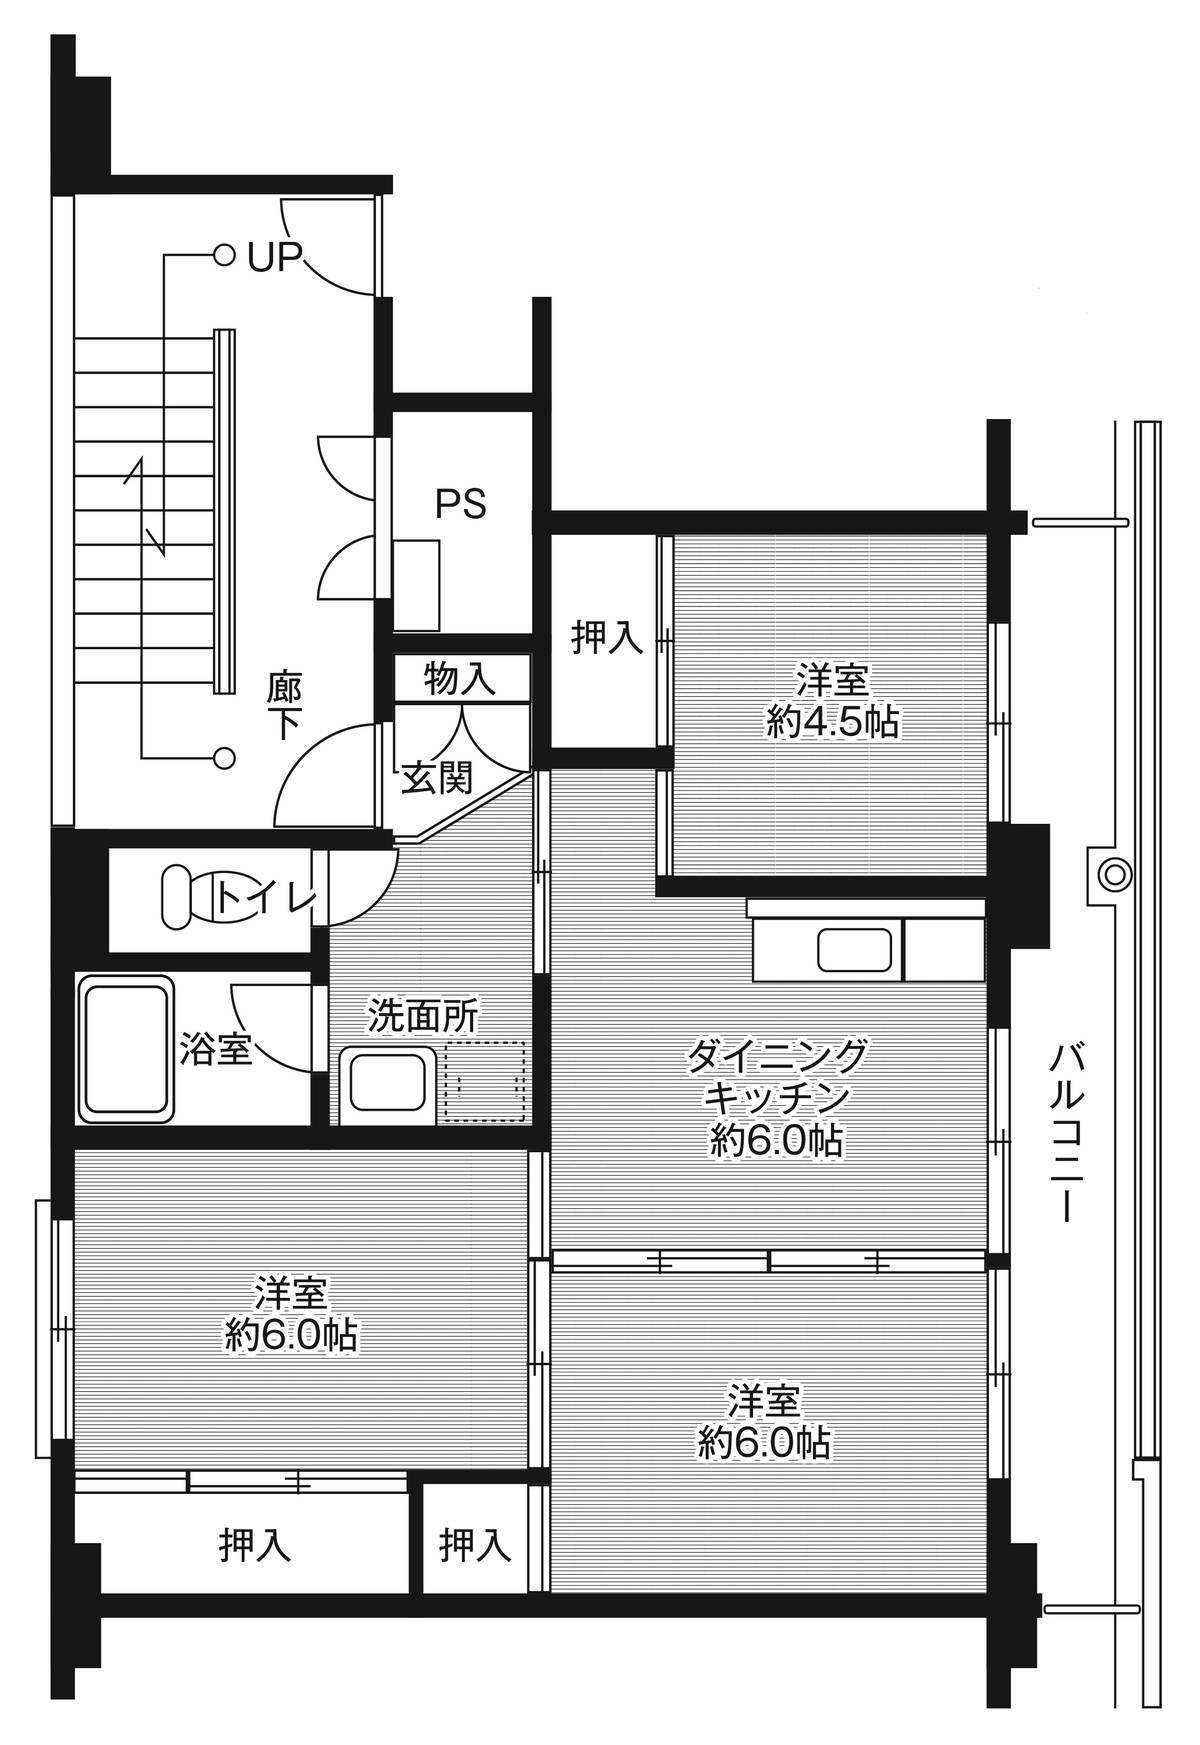 3DK floorplan of Village House Sanno in Tenryu-ku